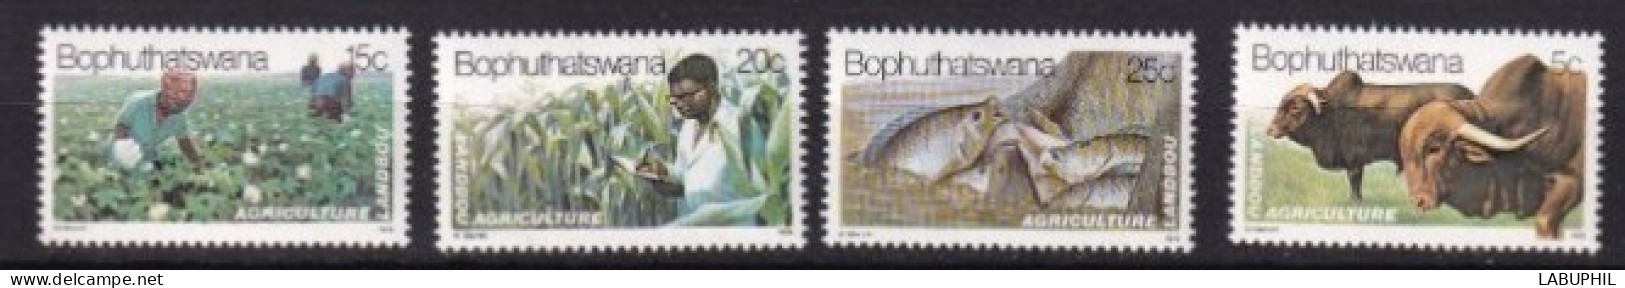 BOPHUYHATSWANA MNH 1979 Agriculture - Bophuthatswana